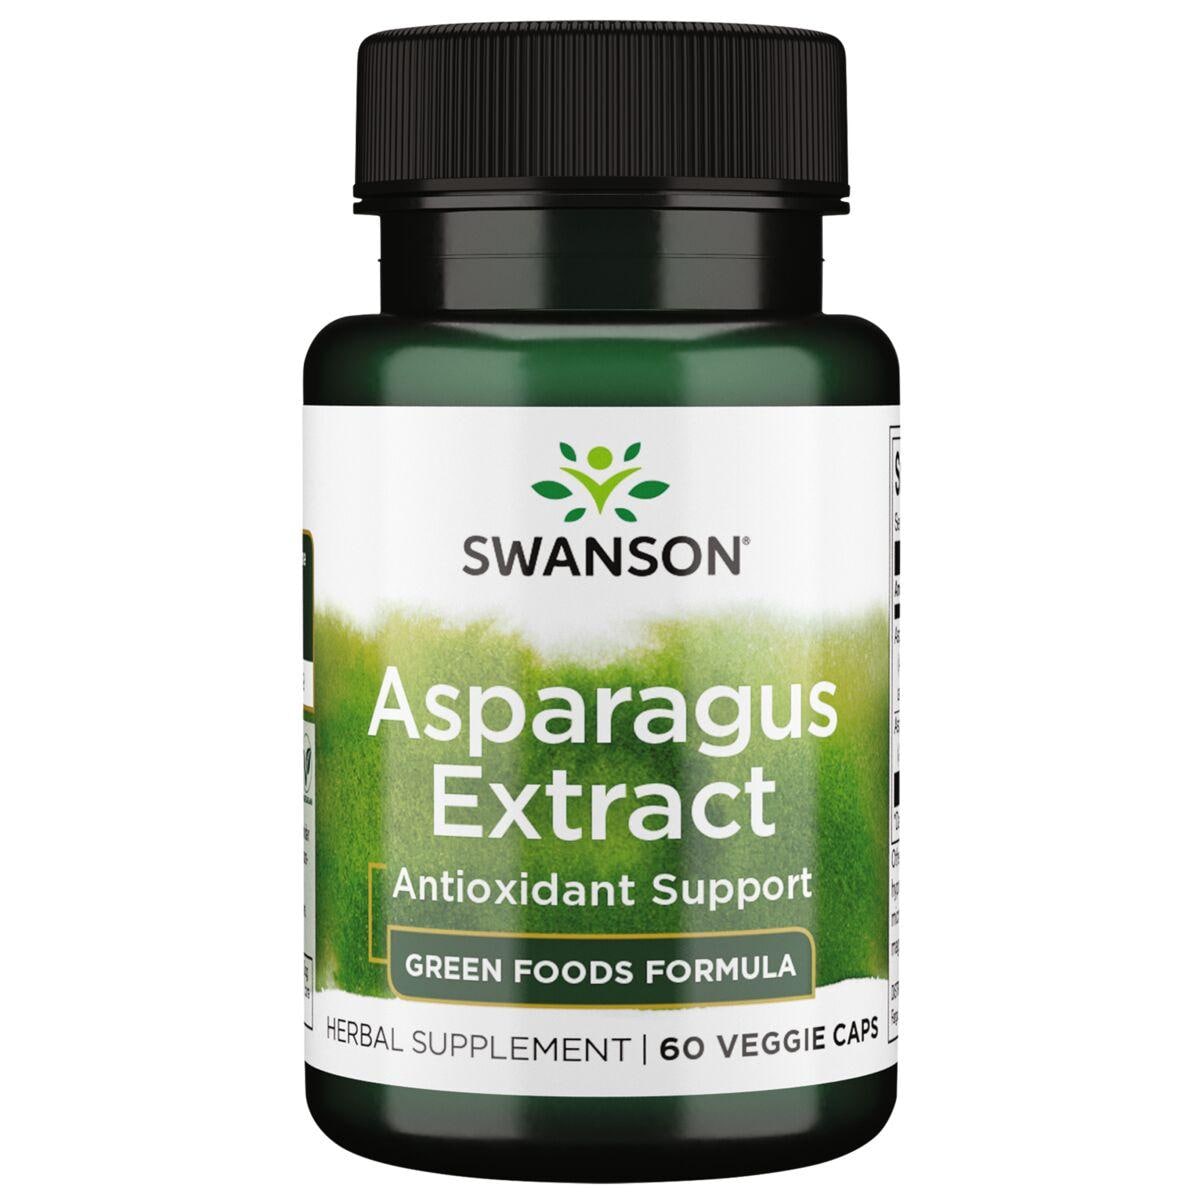 Swanson GreenFoods Formulas Asparagus Extract Supplement Vitamin | 60 Veg Caps